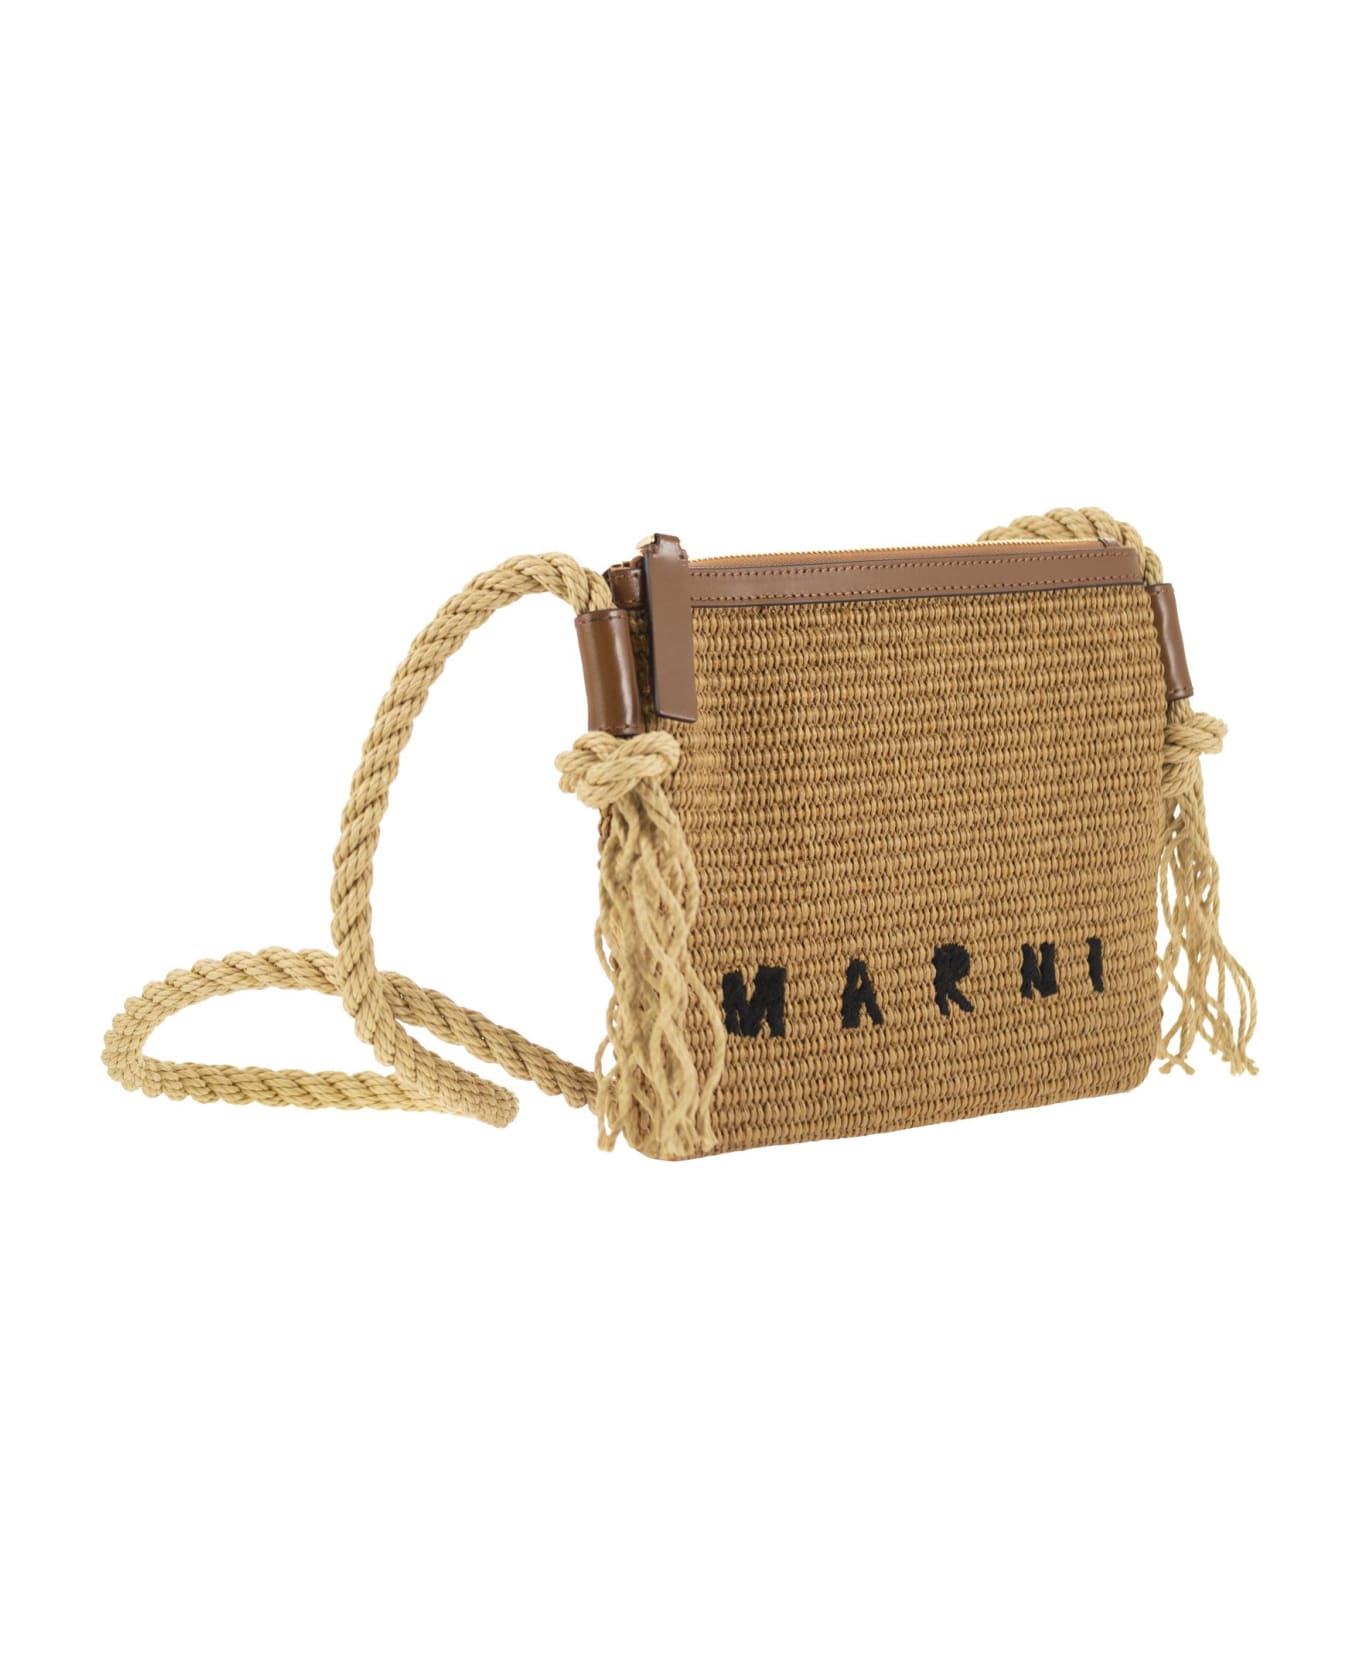 Marni 'marcel Summer' Brown Leather And Fabric Bag - RAWSIENNA